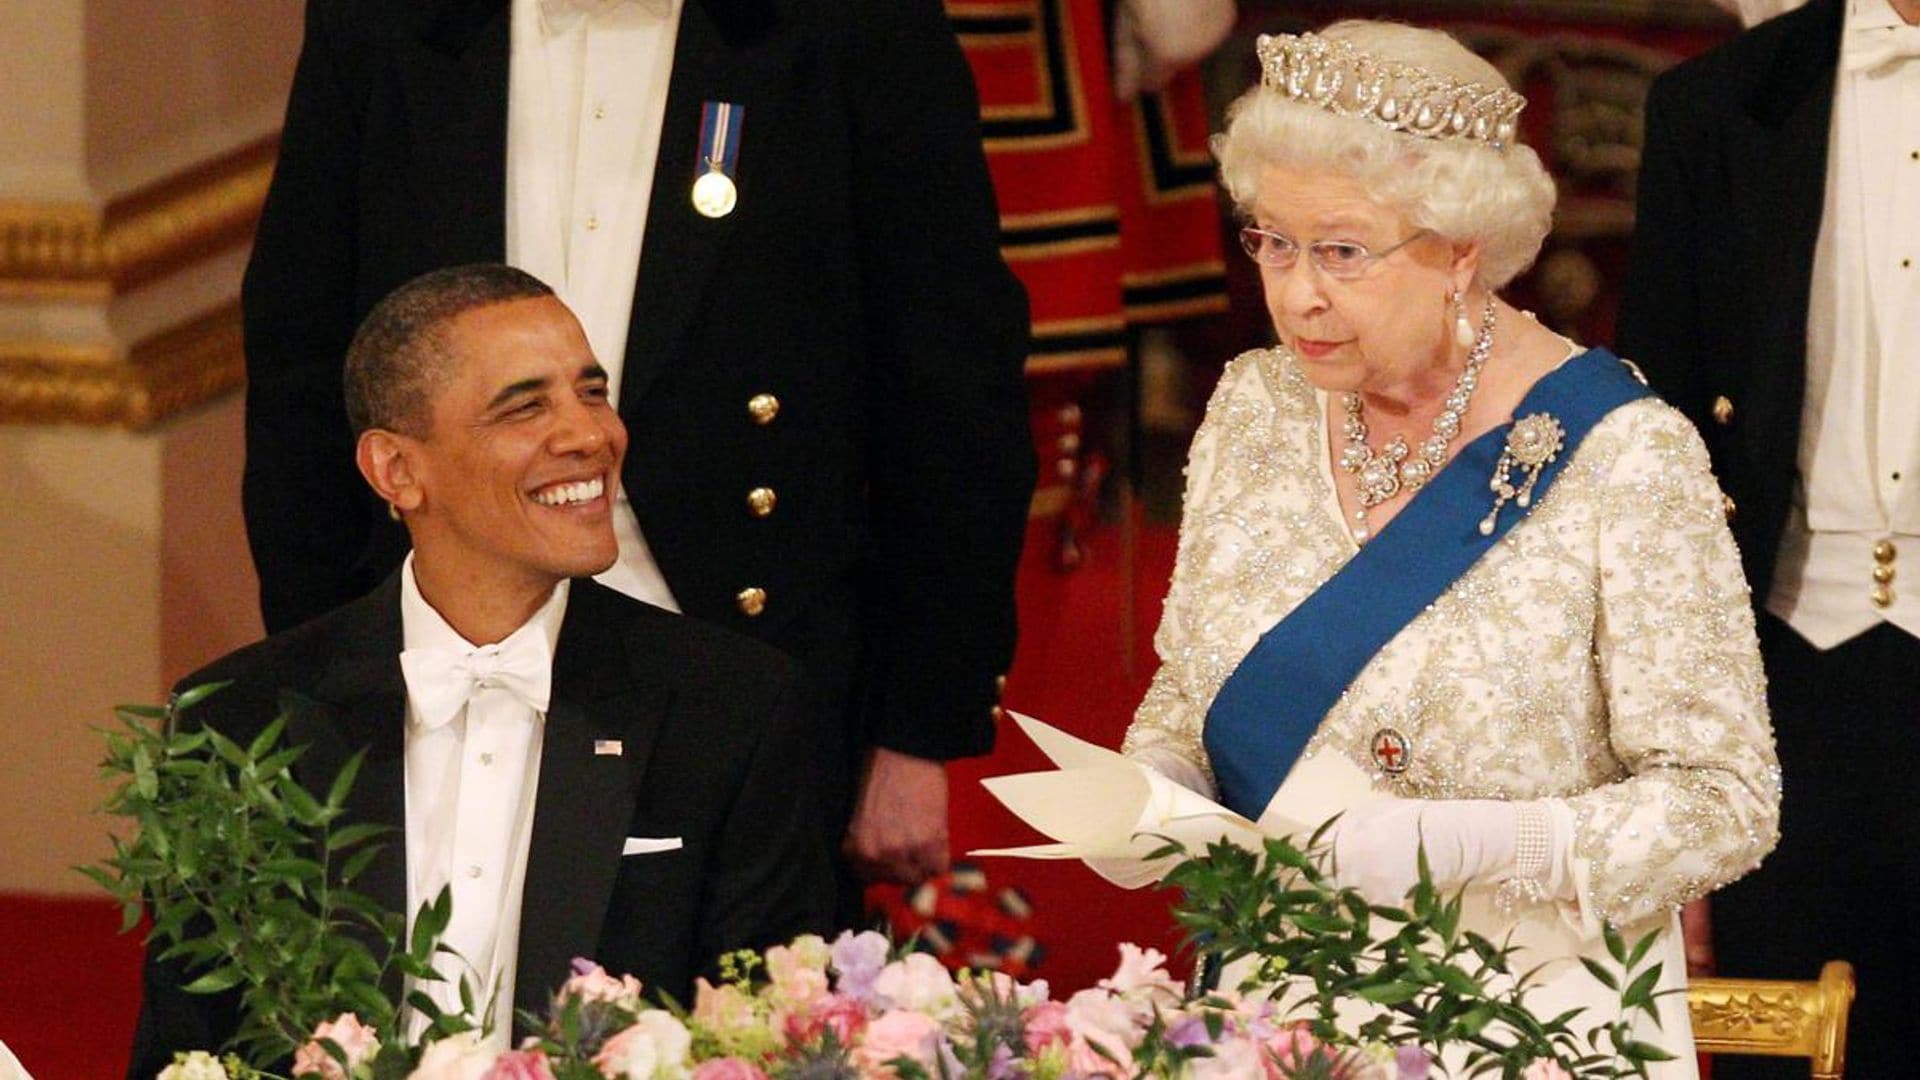 President Barack Obama honors Queen Elizabeth II during the Platinum Jubilee celebration